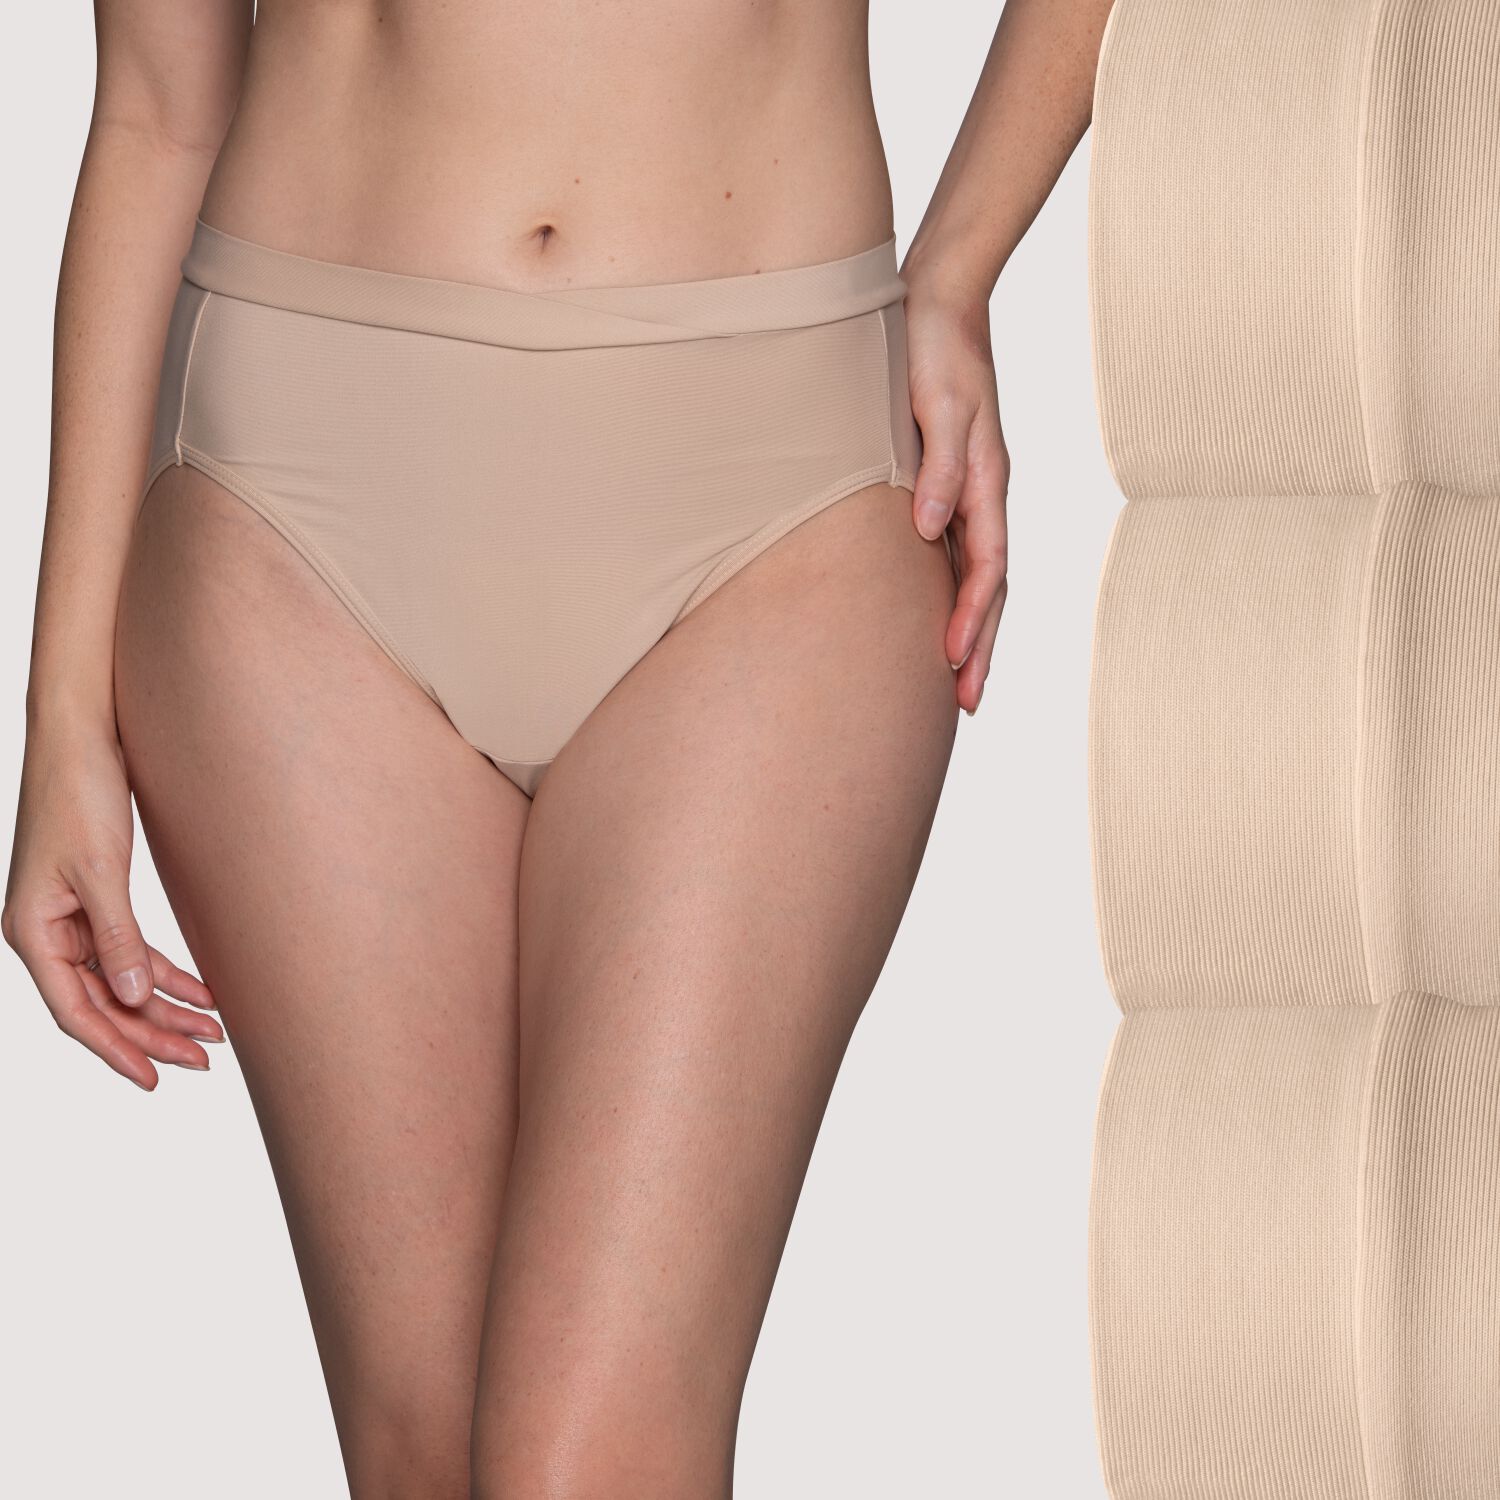 Women Elastic-waistband panties (3-packs)